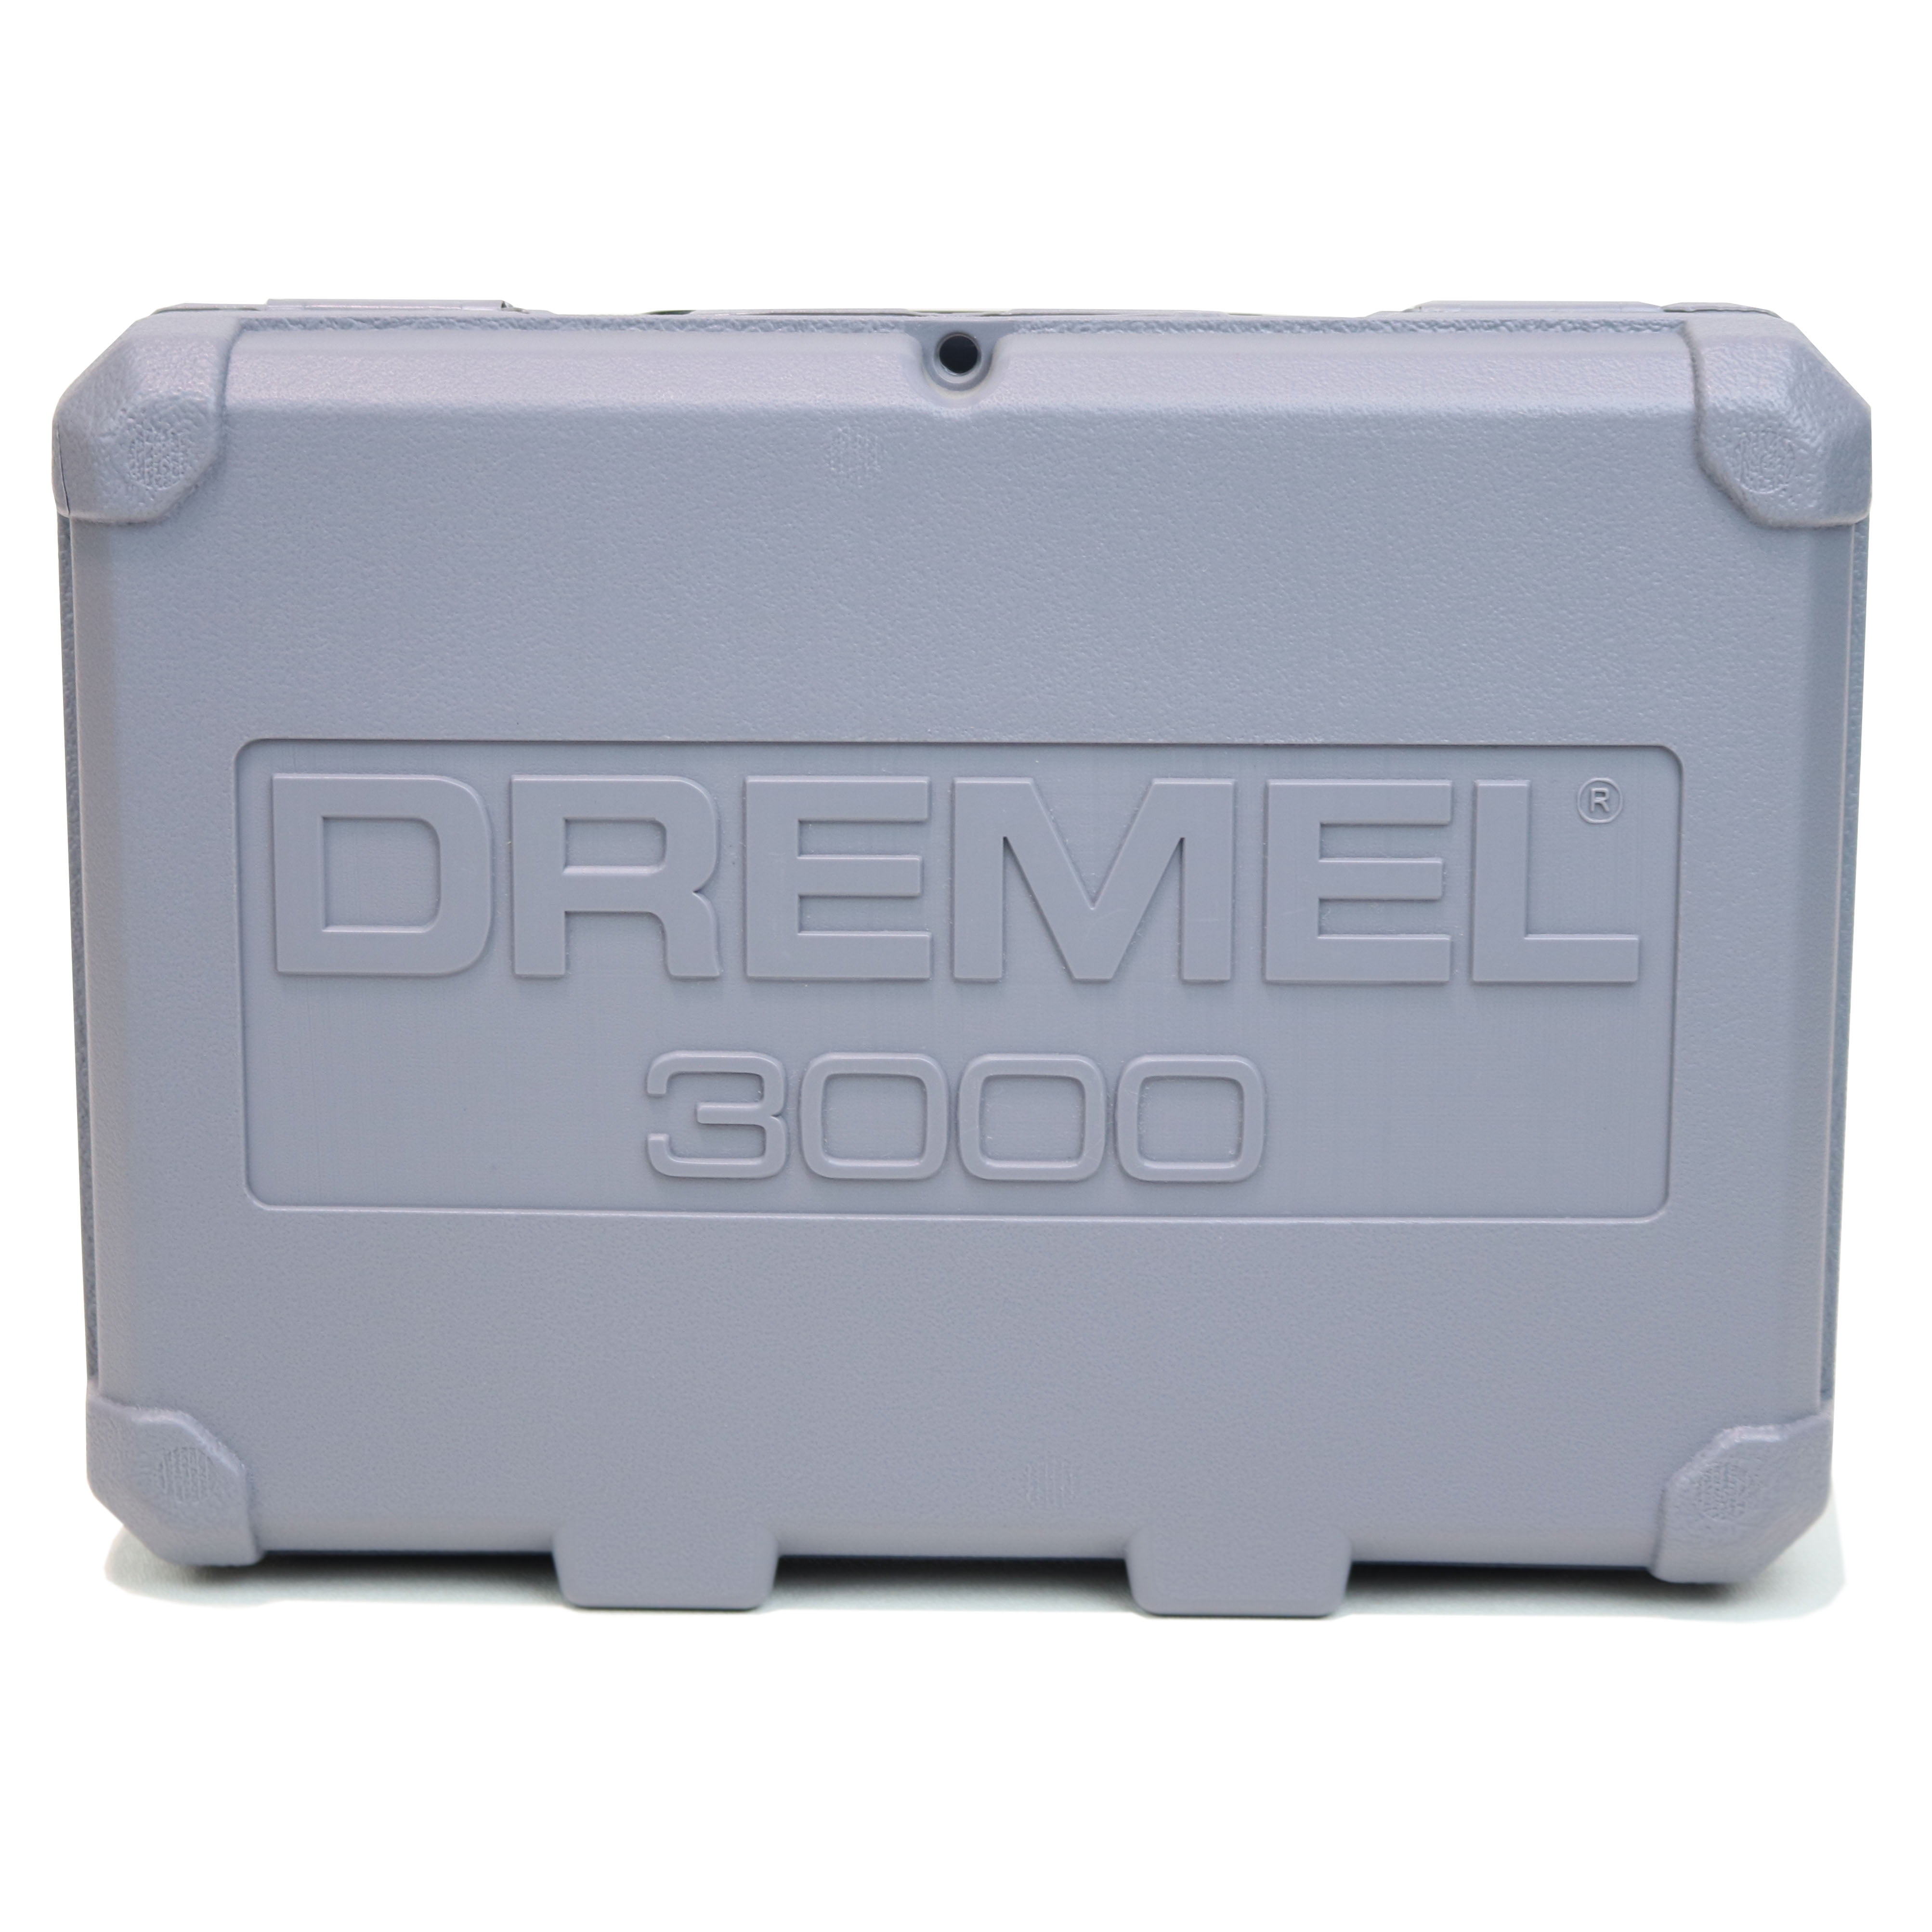 F0133000JR Dremel, Dremel 3000 Corded Rotary Tool, UK Plug